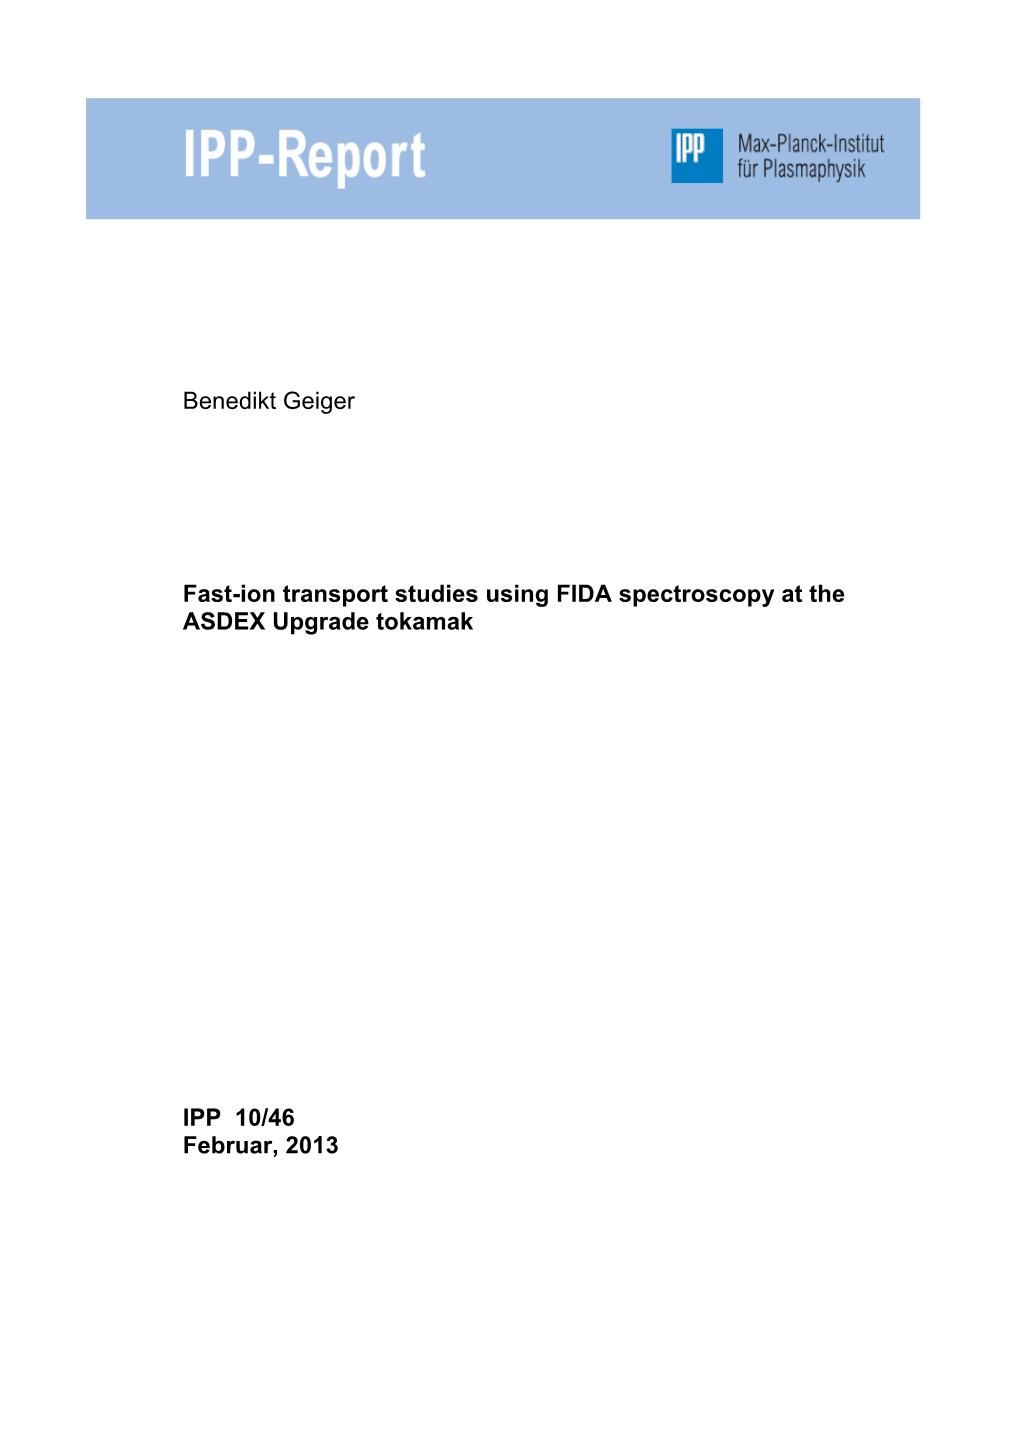 Benedikt Geiger Fast-Ion Transport Studies Using FIDA Spectroscopy At